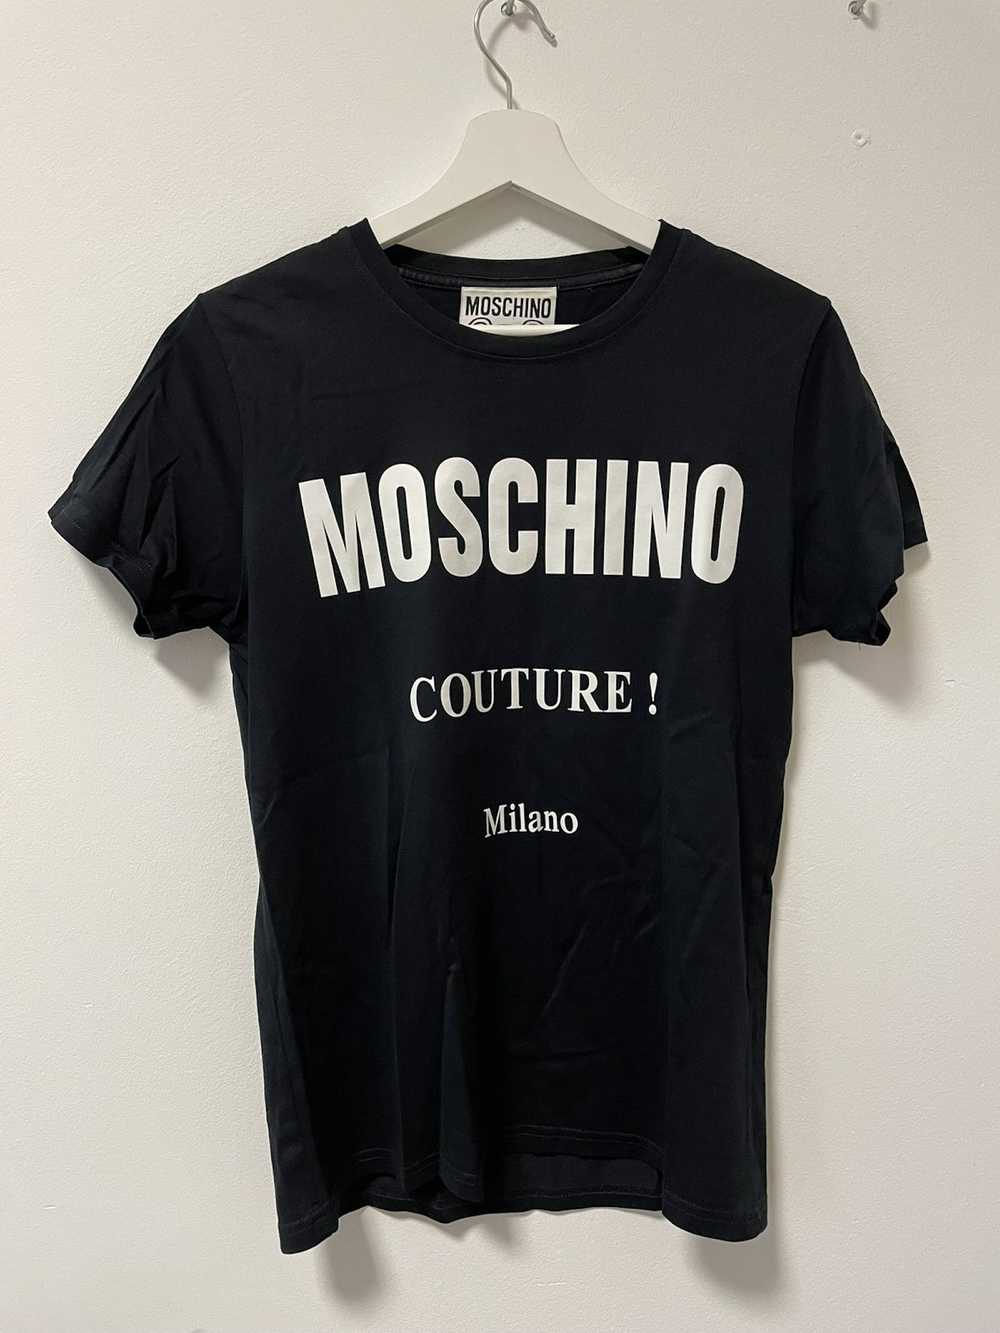 Moschino T-shirt Moschino Couture Milano - image 1